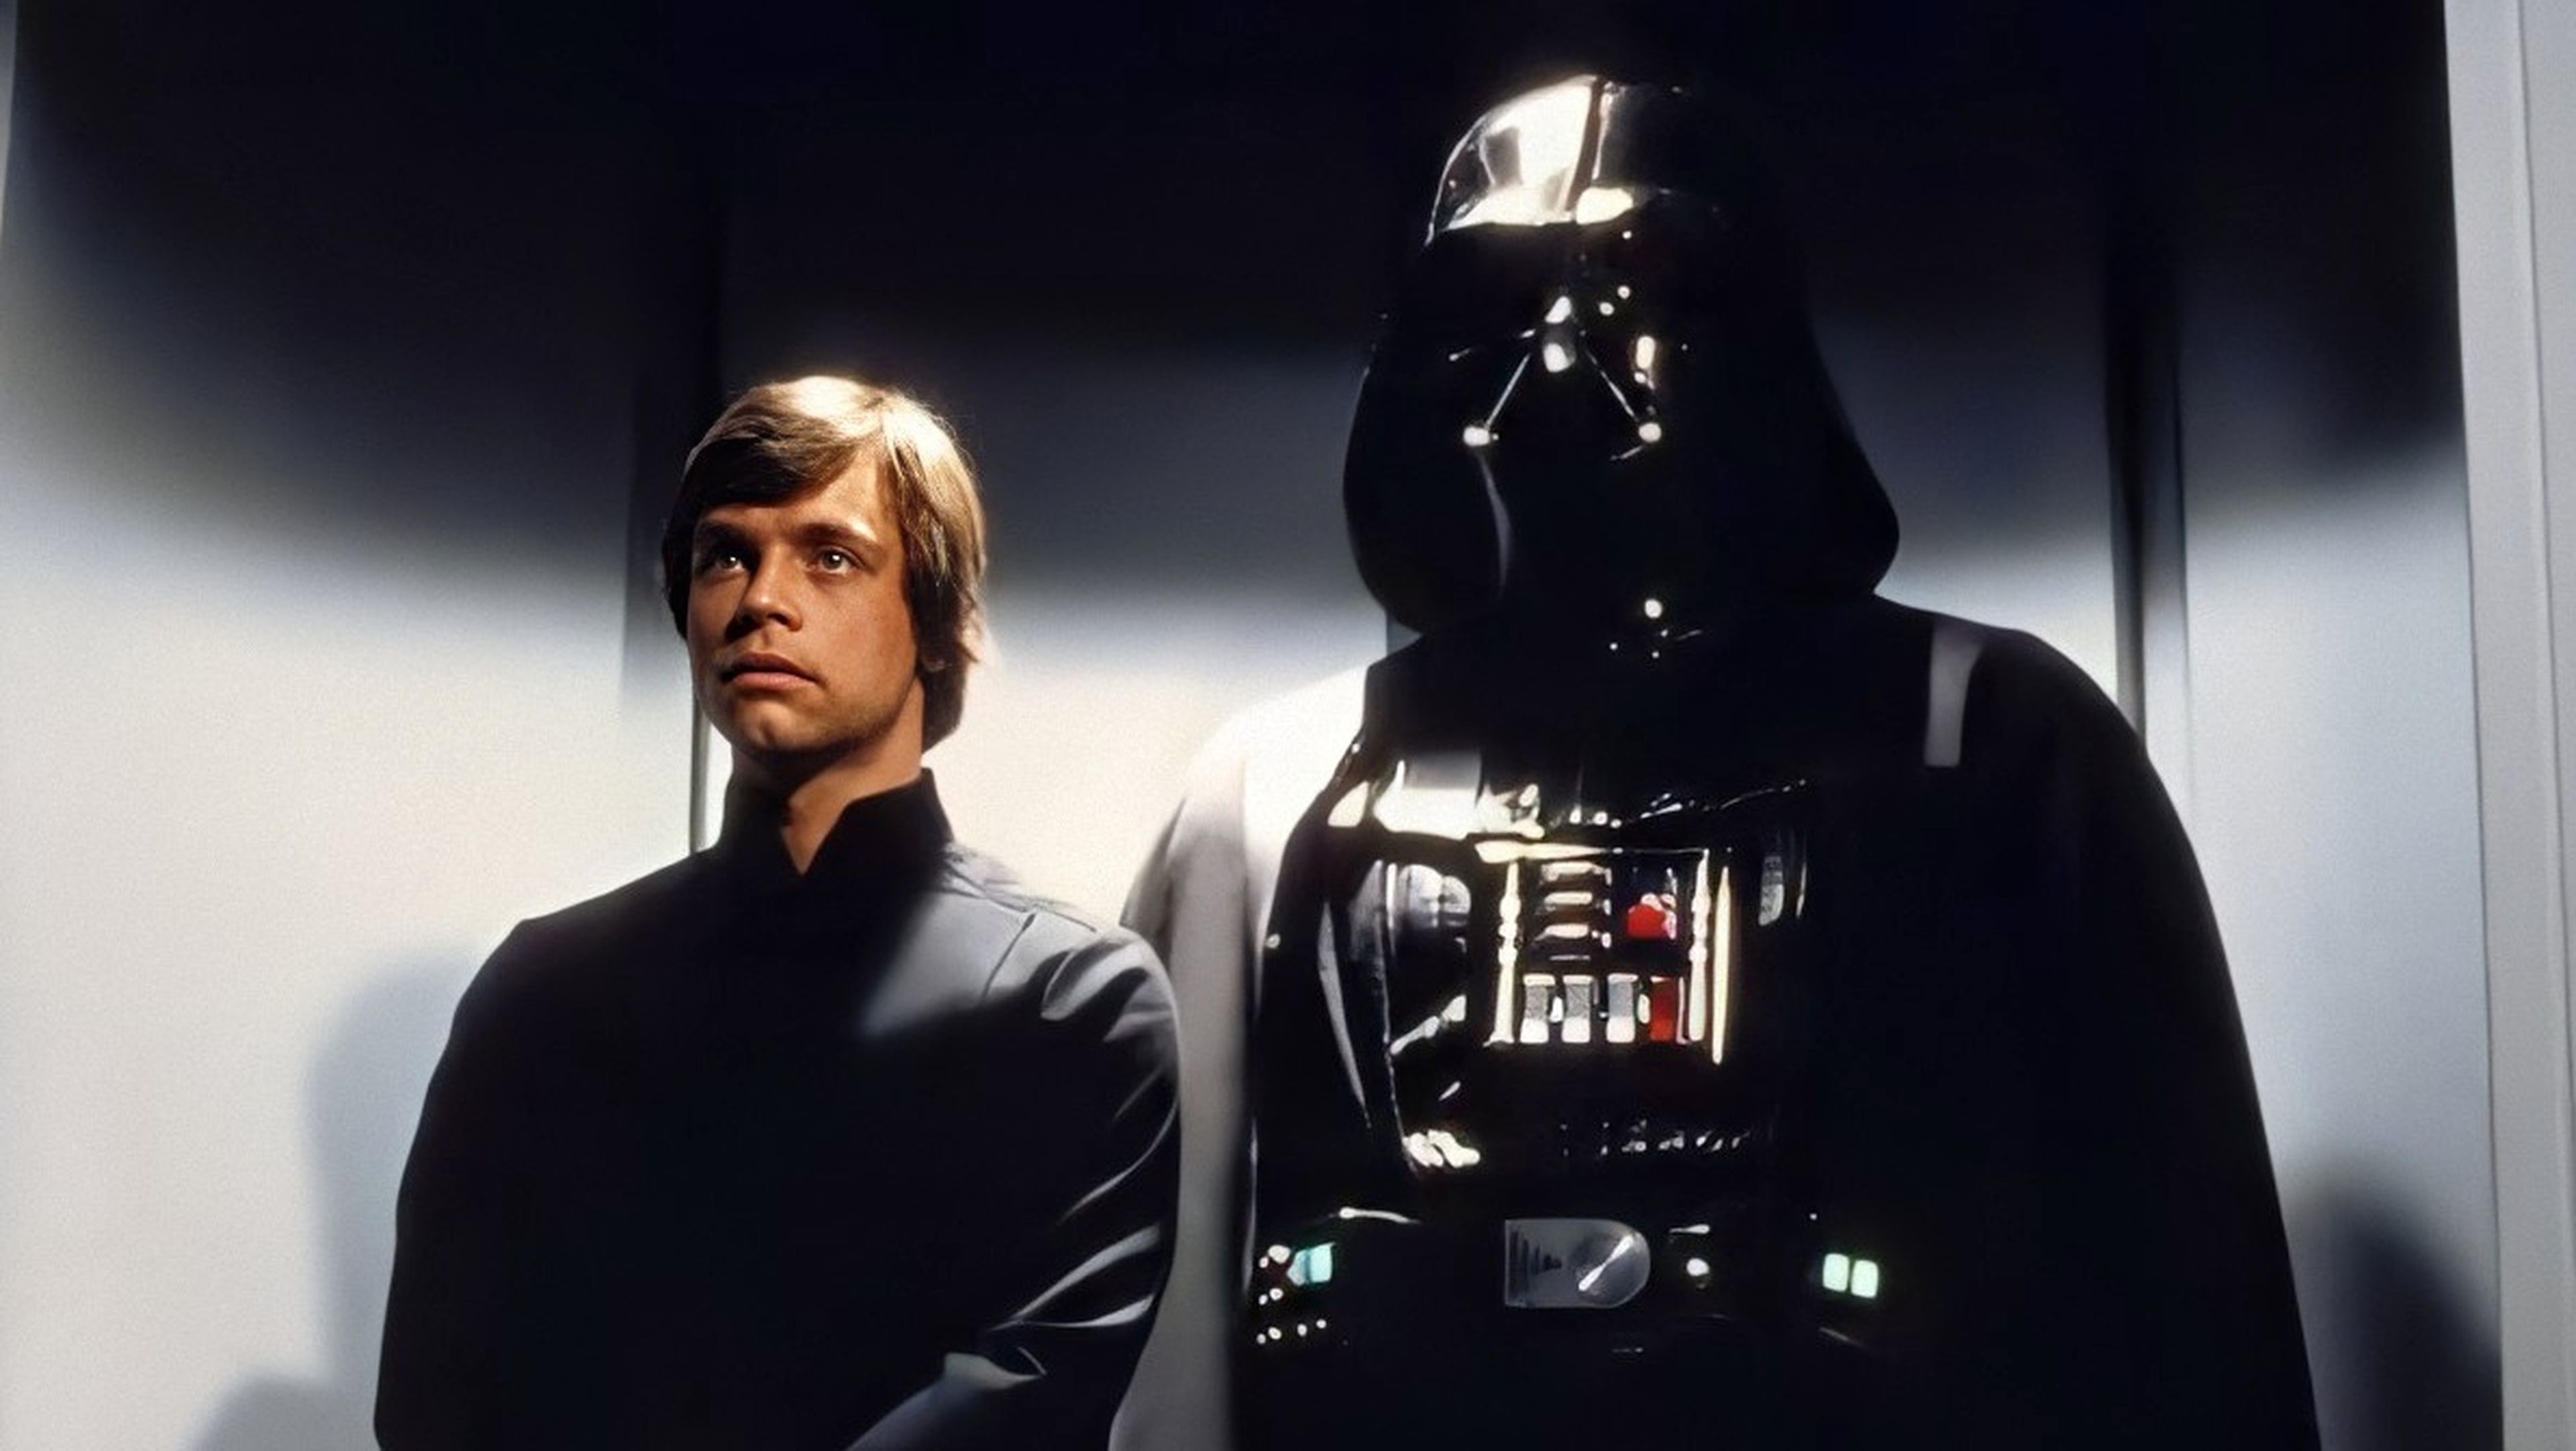 Star Wars episodio VI: El retorno del Jedi - Luke Skywalker - Darth Vader